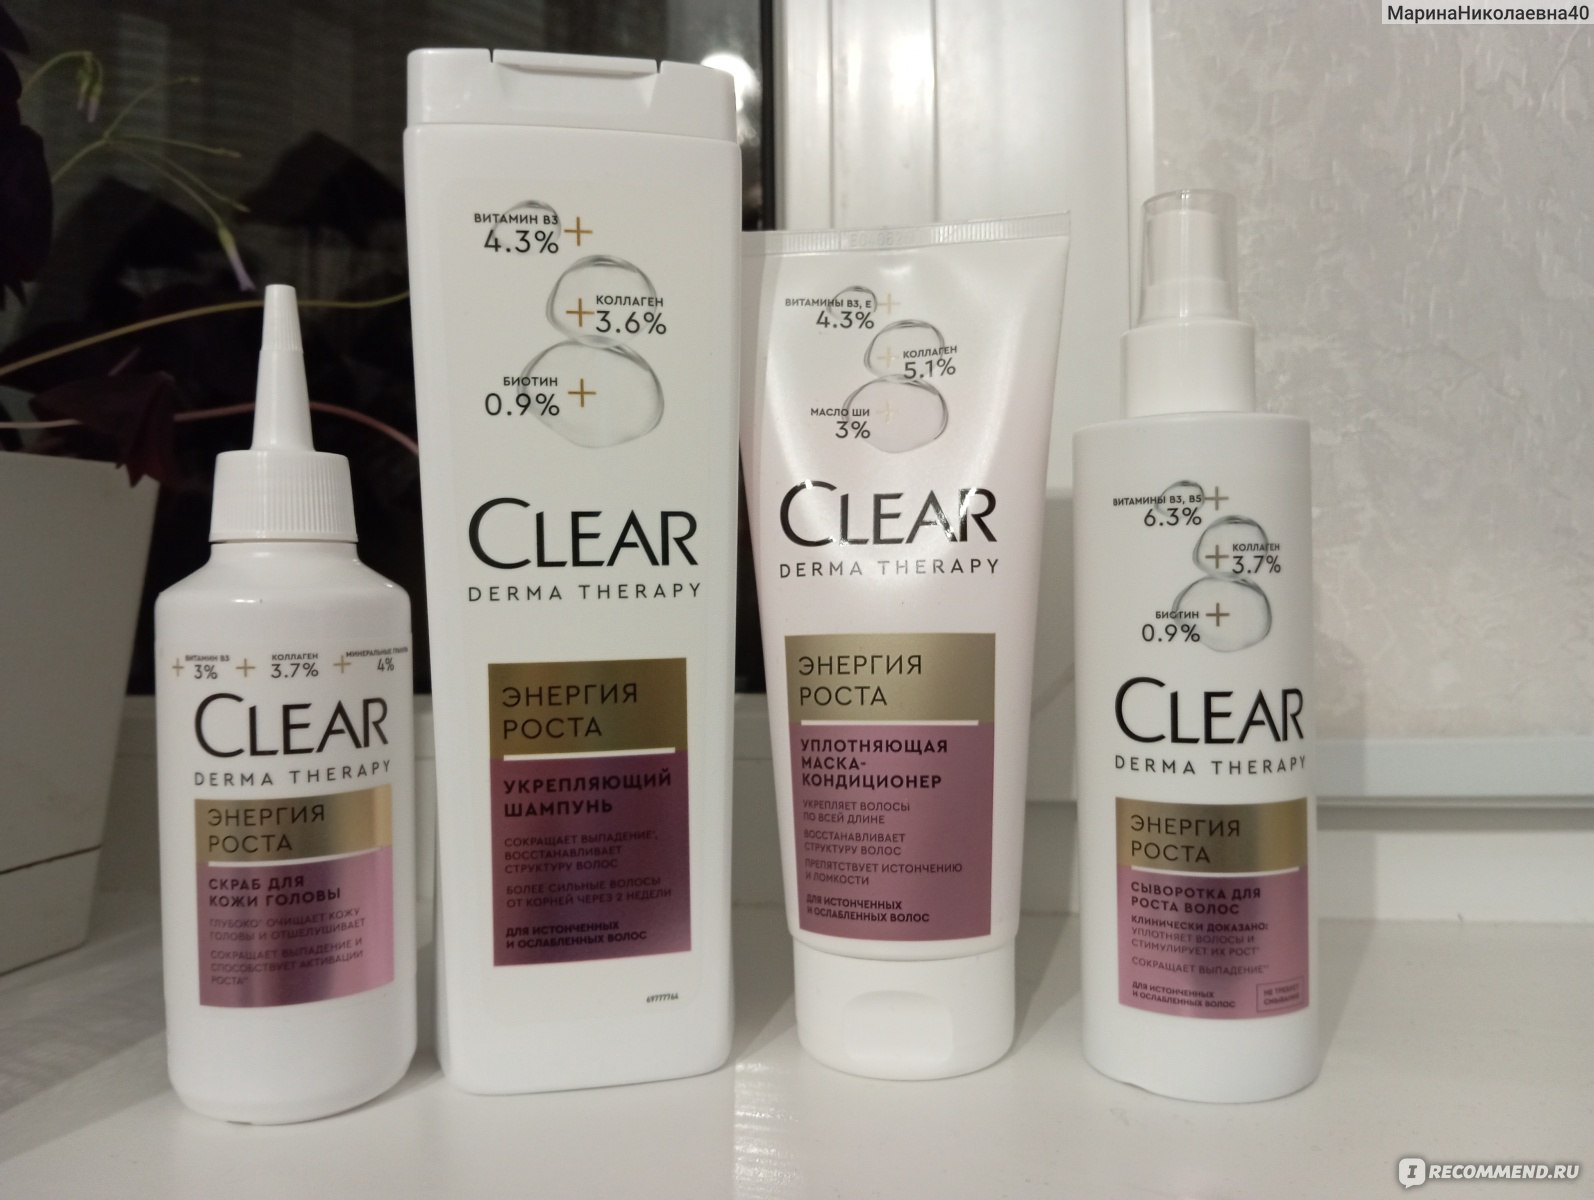 Clear derma therapy сыворотка для волос